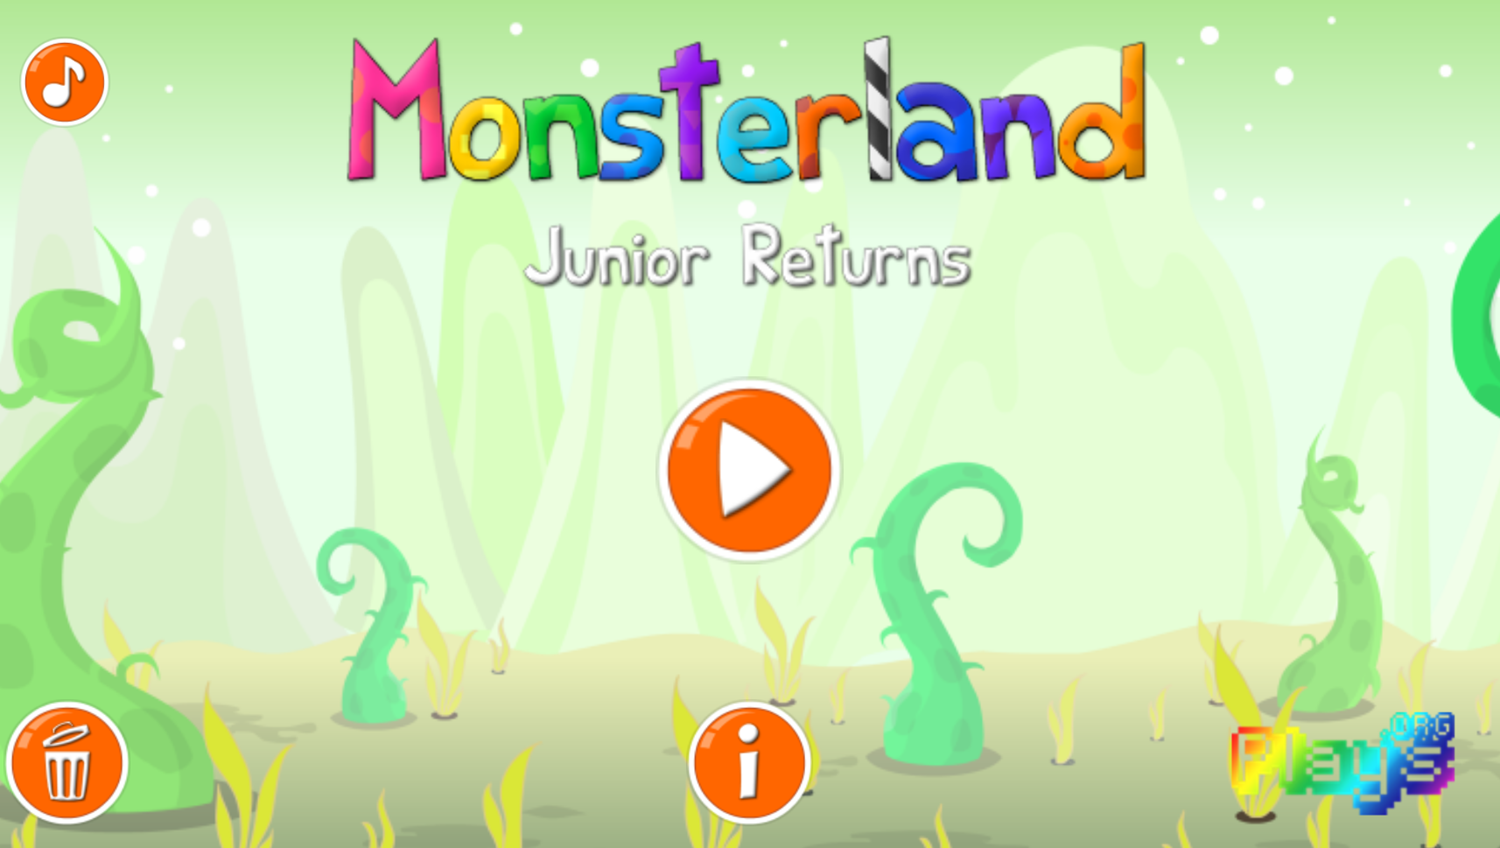 Monsterland 3 Junior Returns Welcome Screen Screenshot.